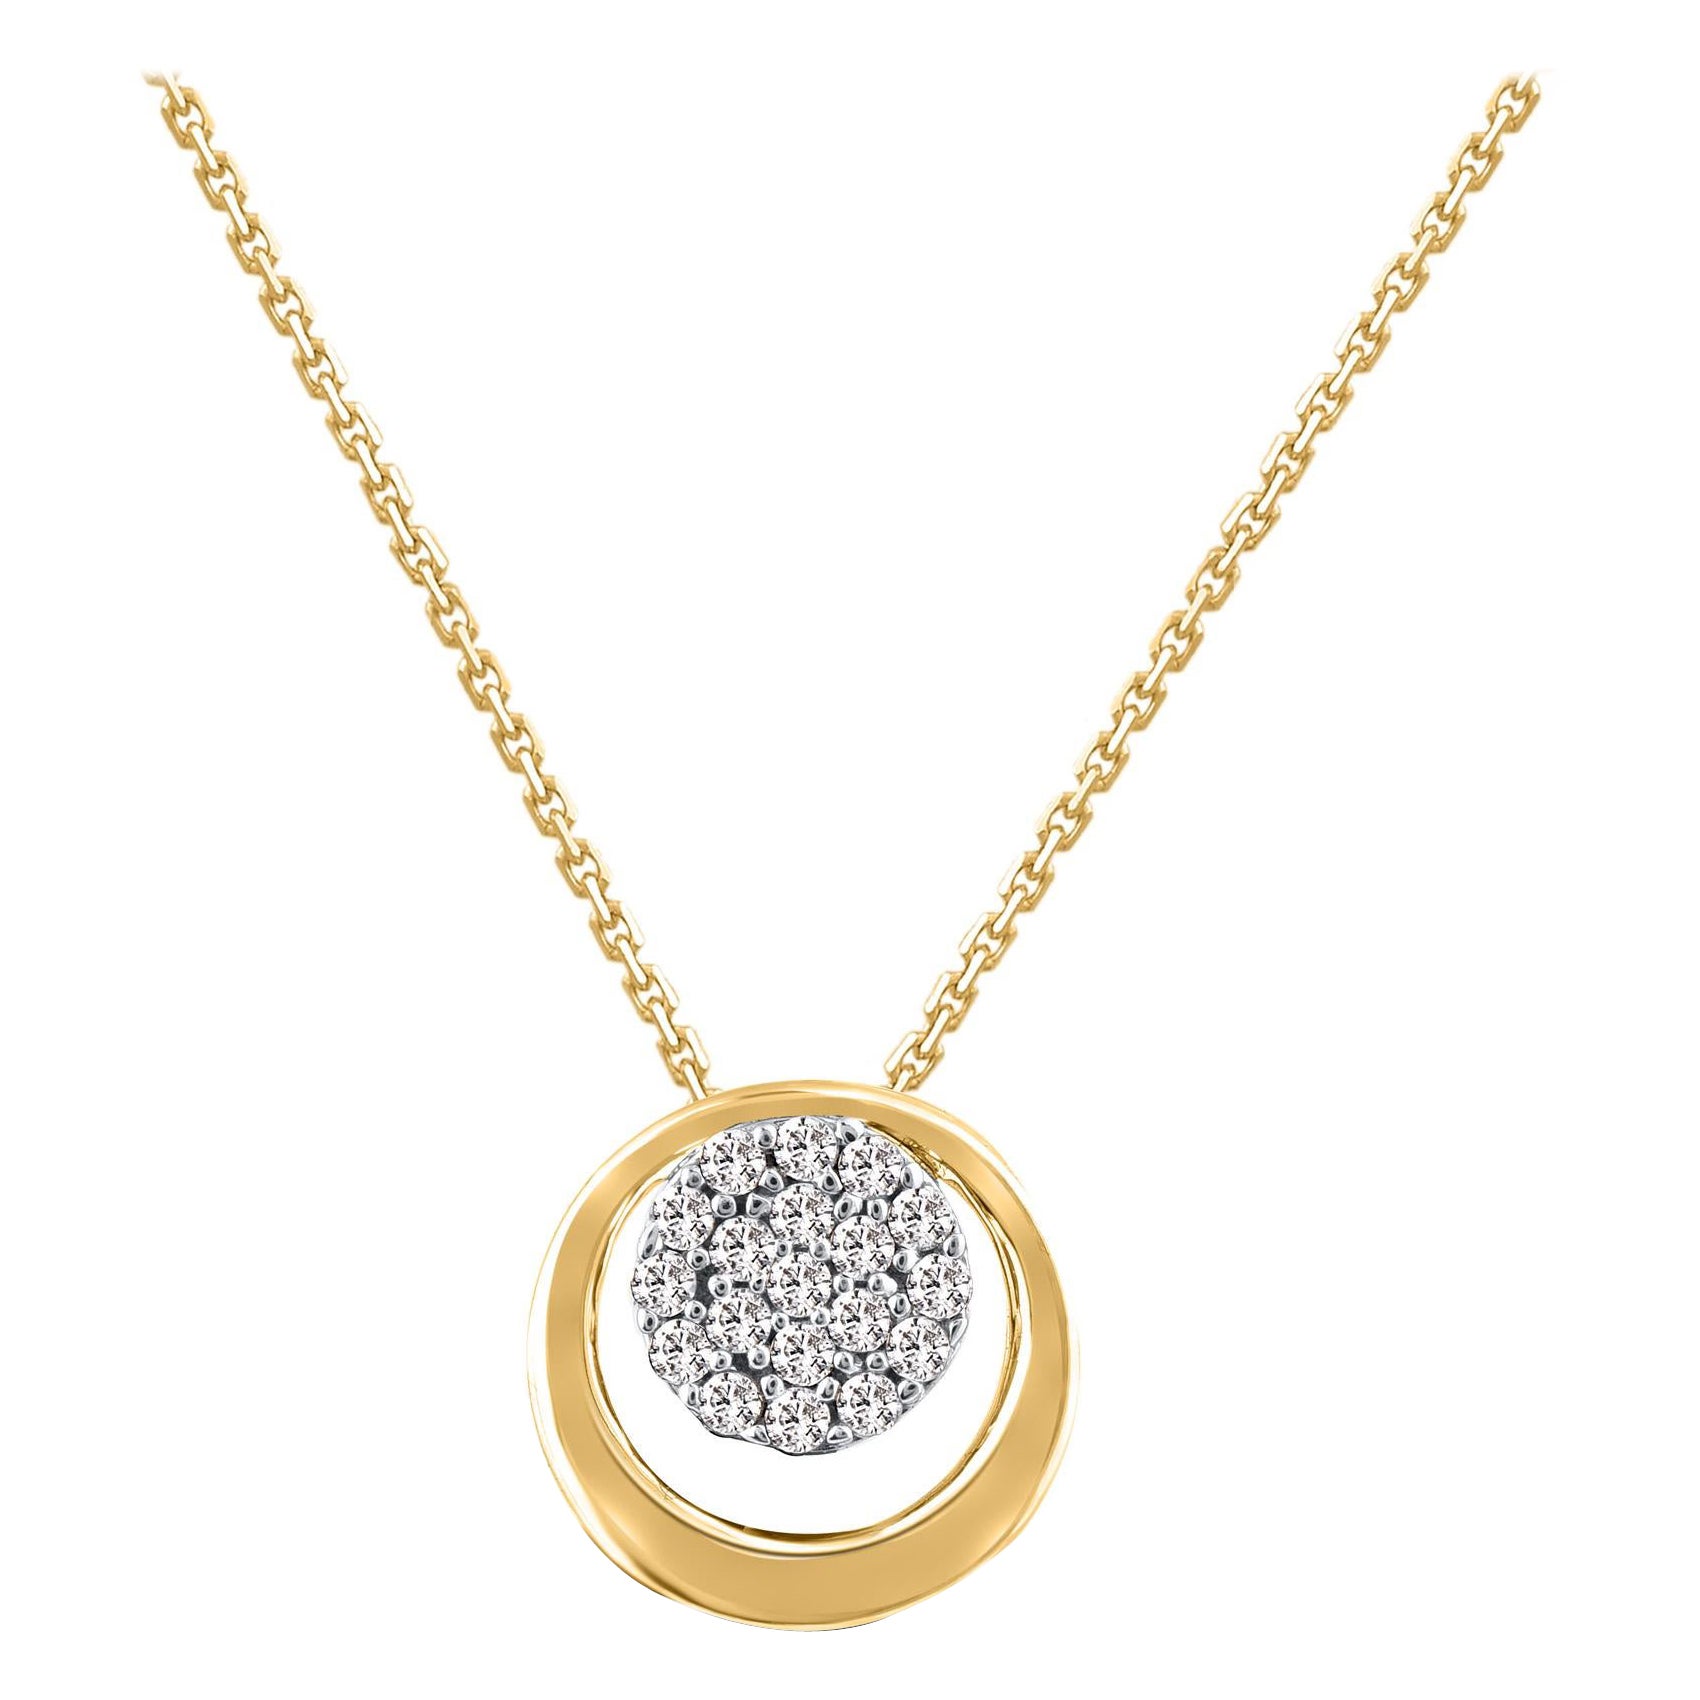 TJD 0.15 Carat Brilliant Cut Diamond 14KT Yellow Gold Circle Pendant Necklace